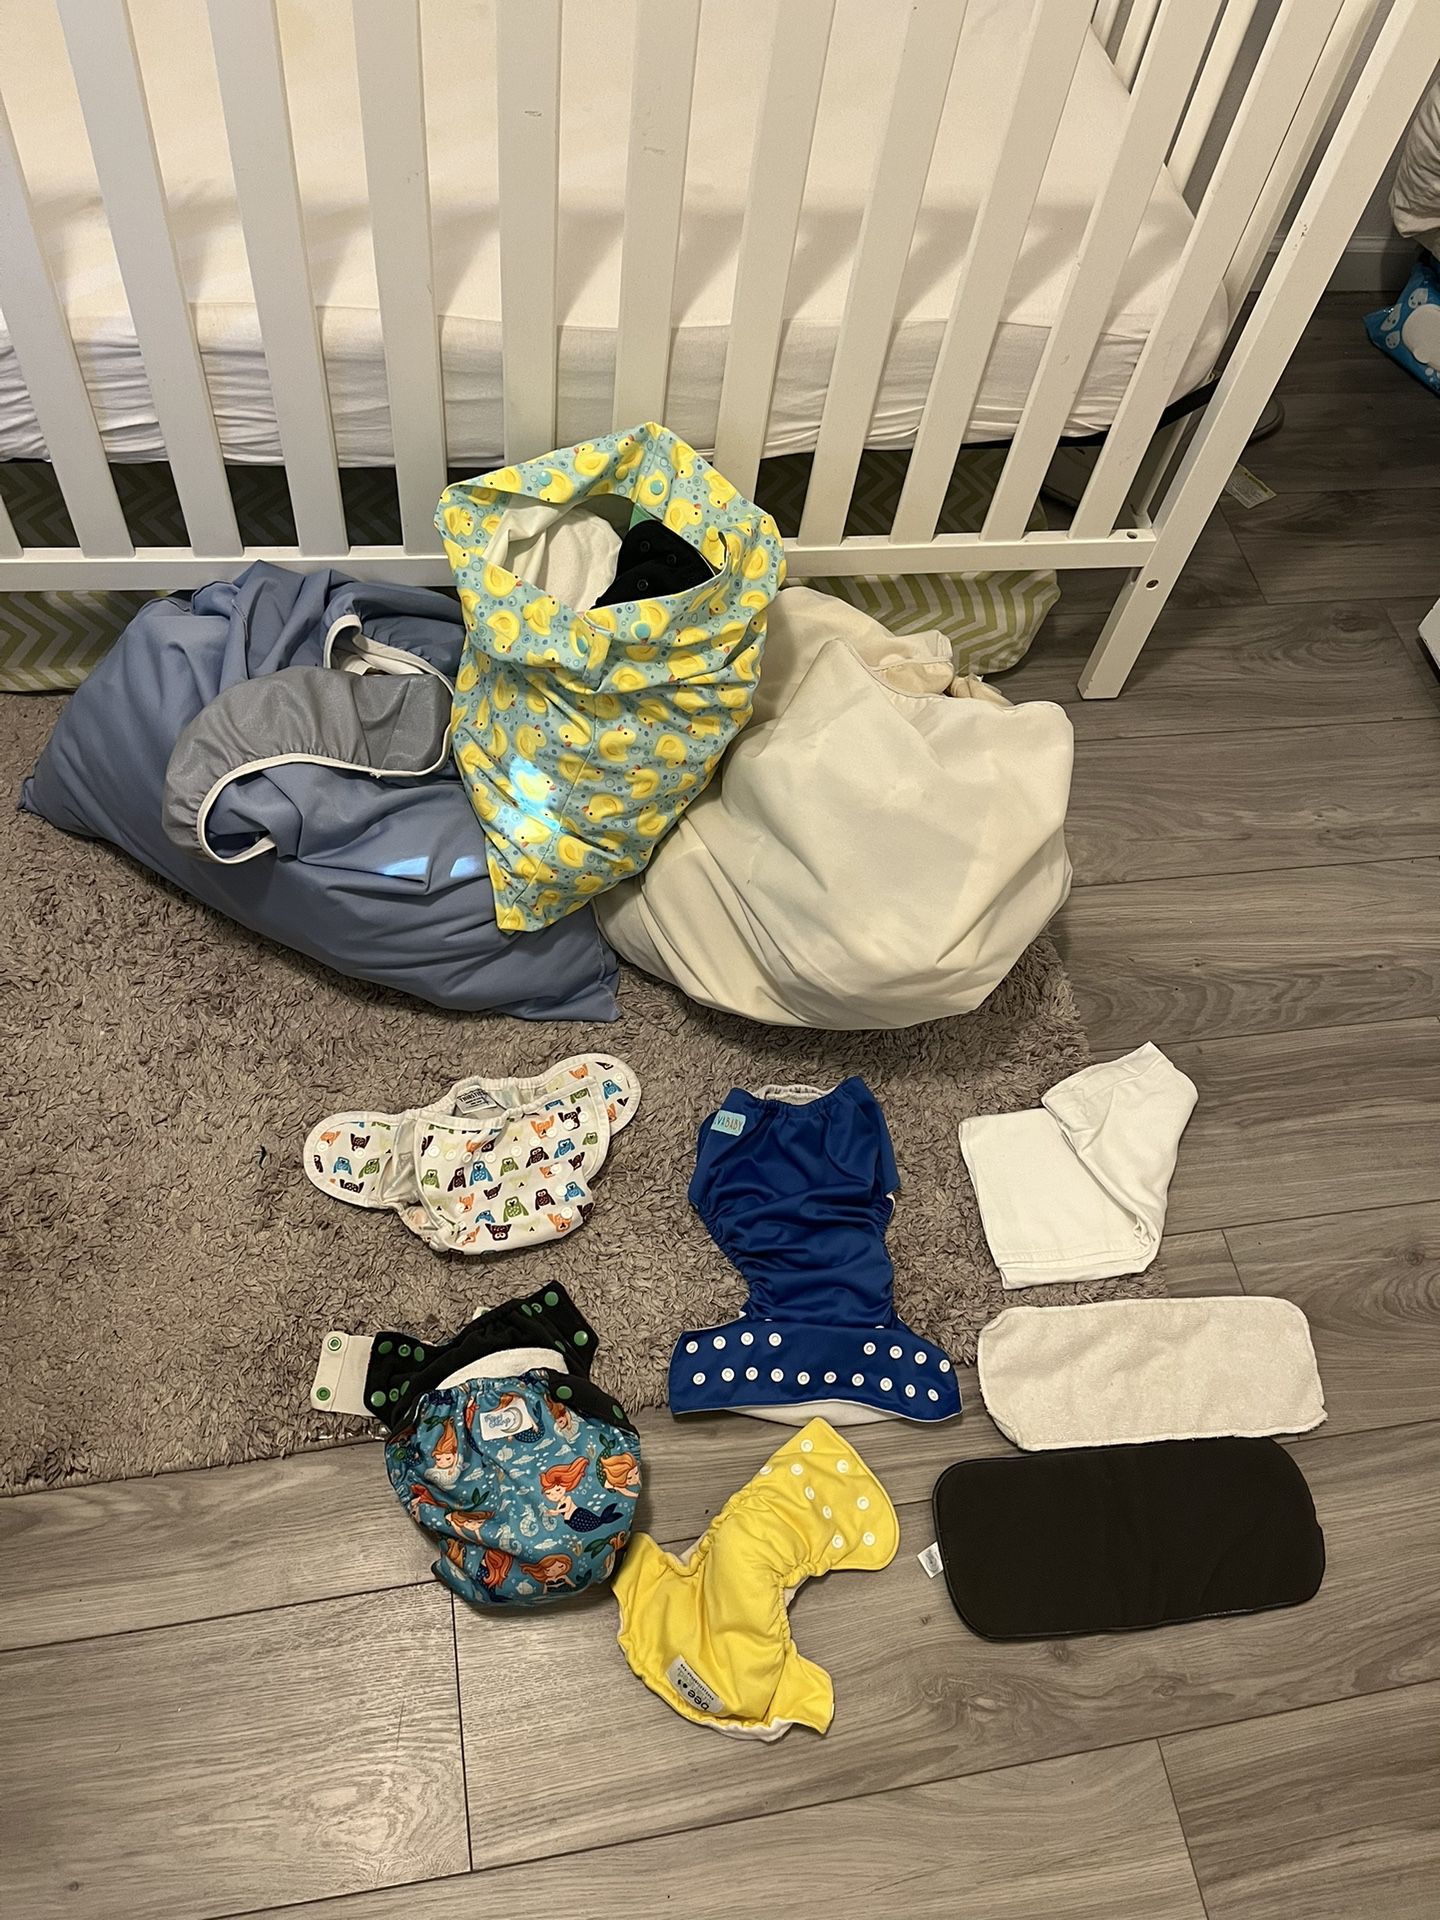 Cloth Diapers Full Set